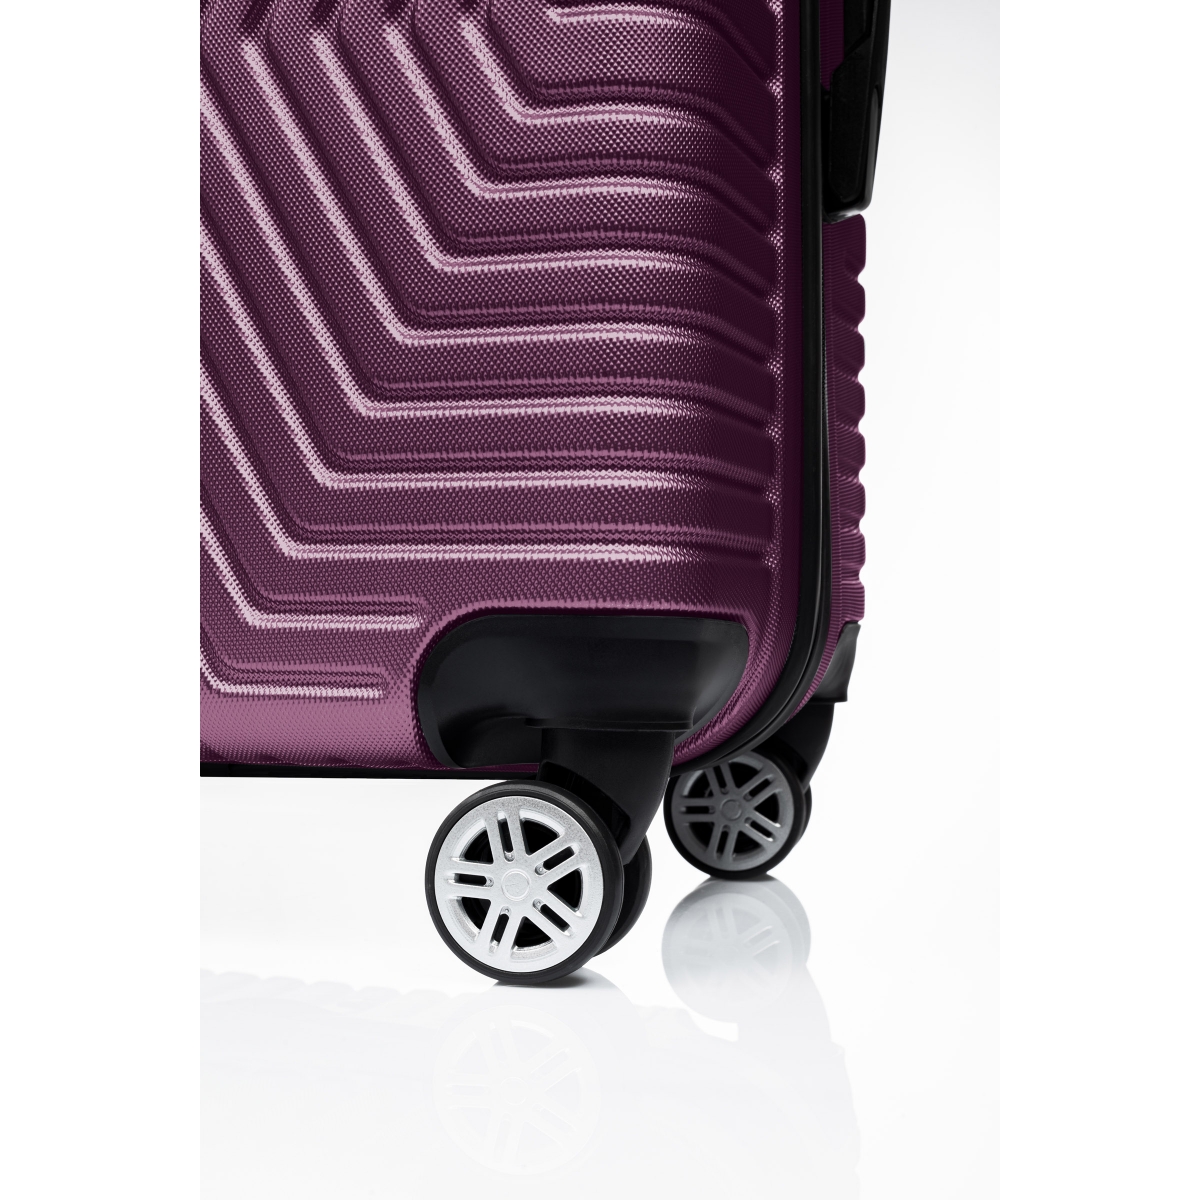 G&D Polo Suitcase ABS 3'lü Lüx Valiz Seyahat Seti - Model:600.09 Mürdüm